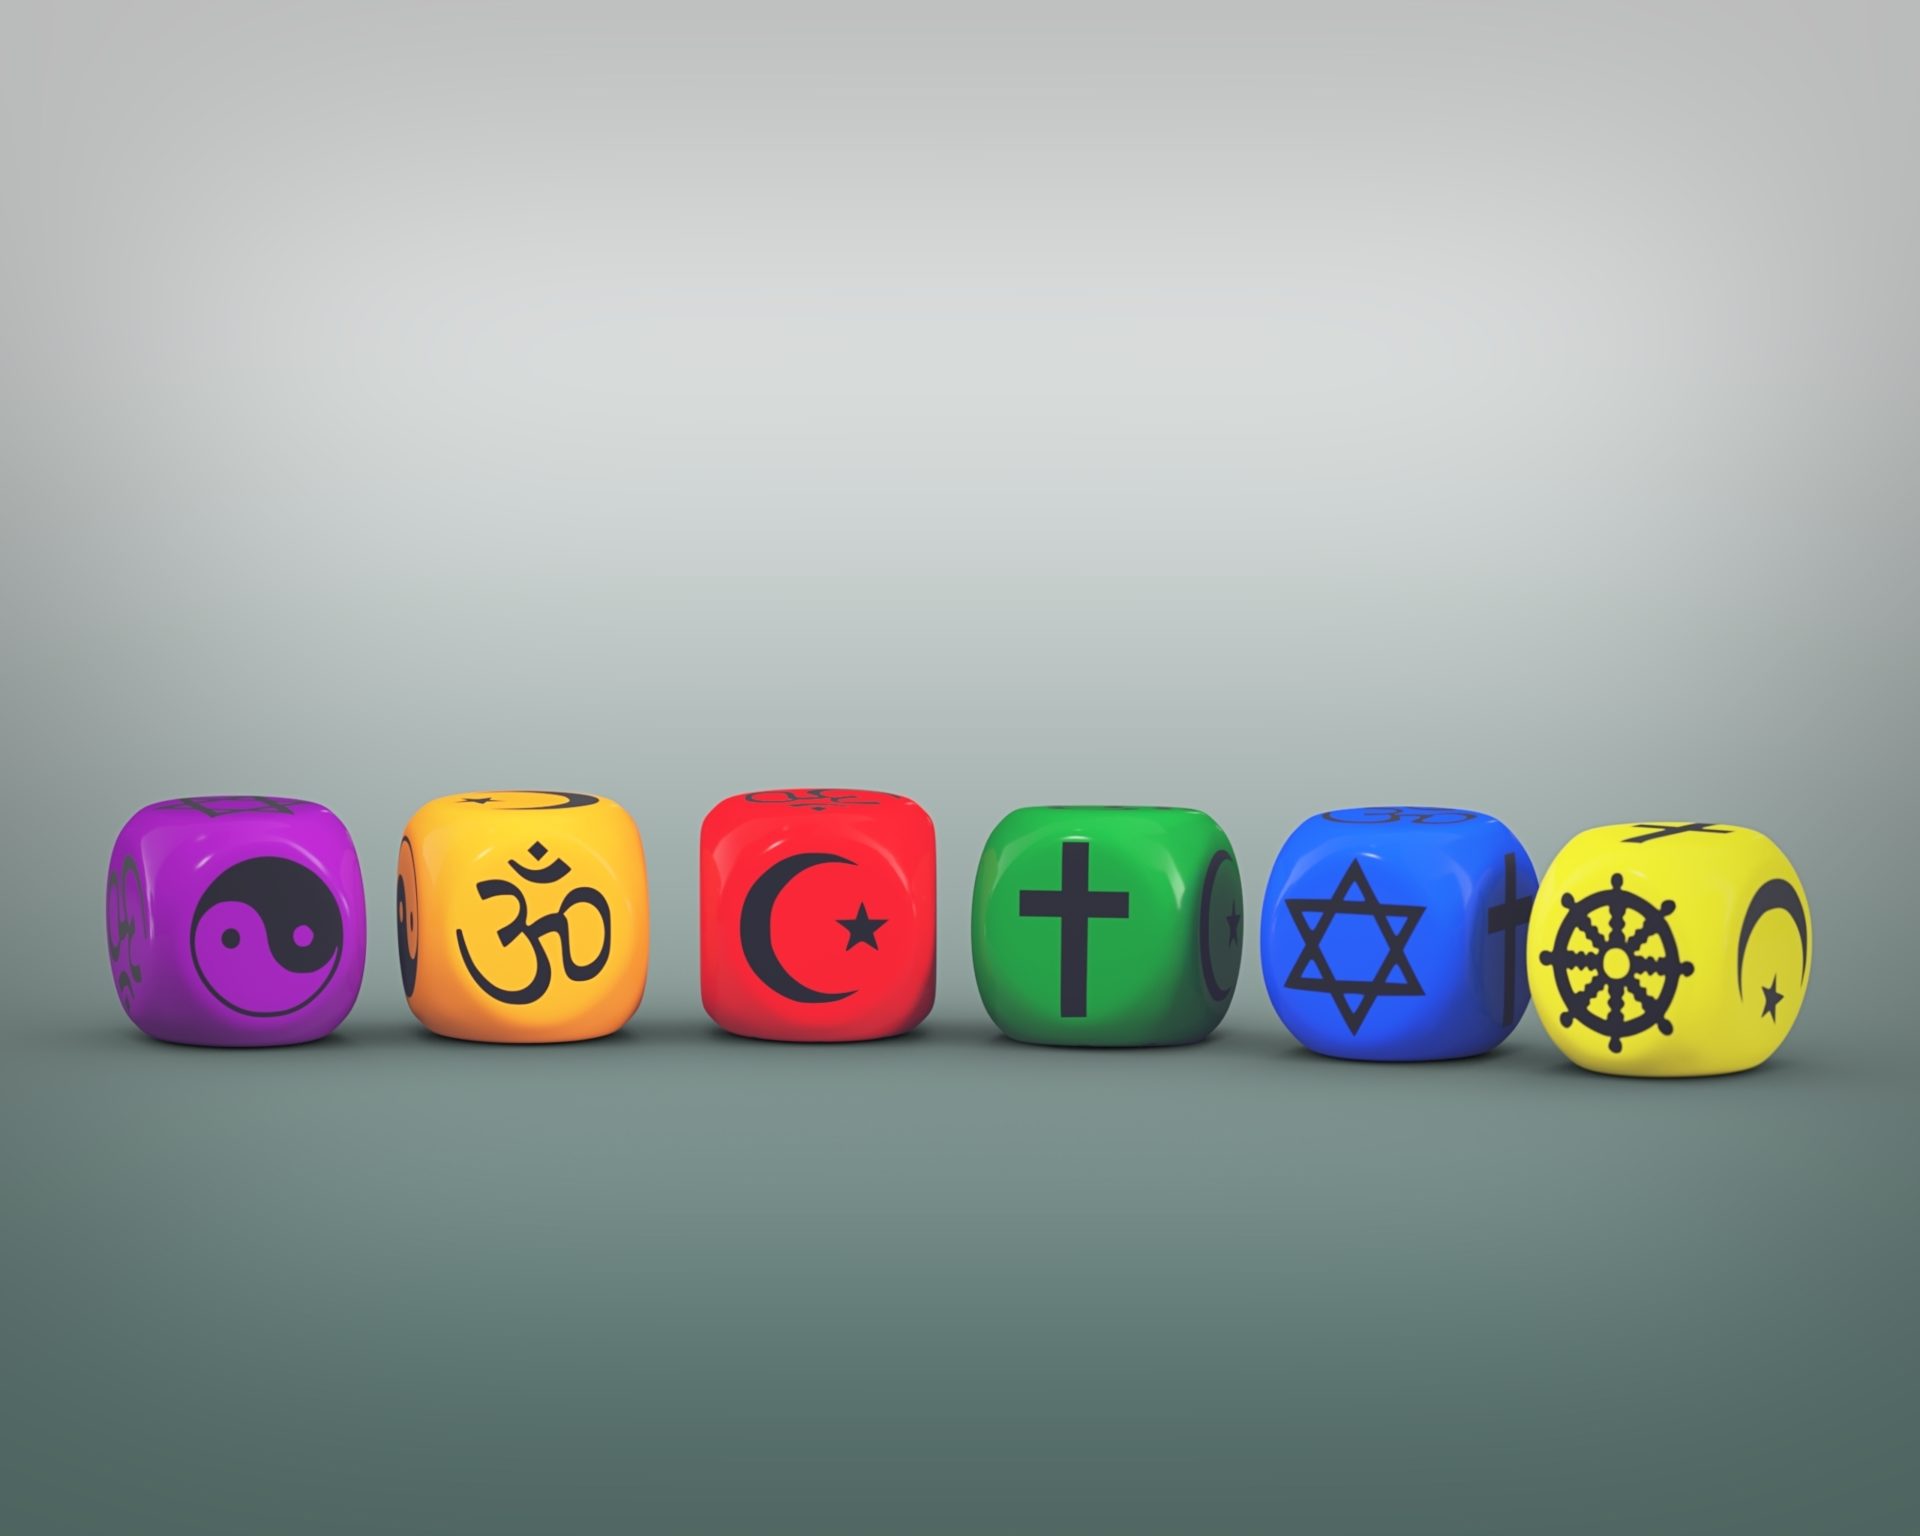 The Resilience of the Human Spirit: Interfaith Alliances Repair Schisms